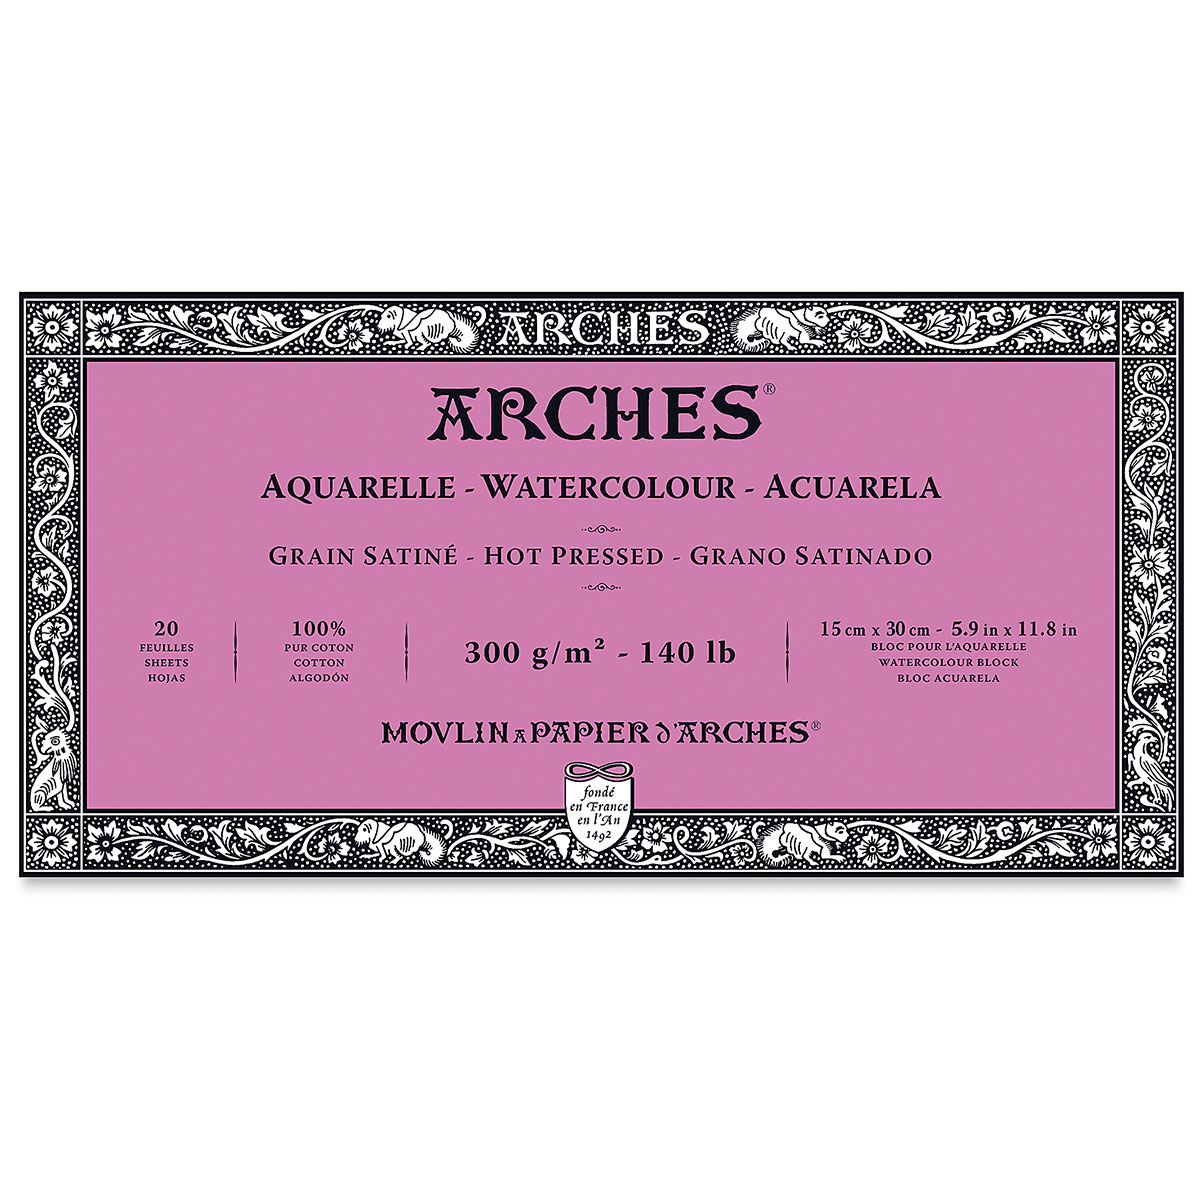 Hot pressed. Бумага Arches 300 g. Бумага Arches Cold Press. Бумага Arches 300 g холодный пресс. Arches бумага 1914.